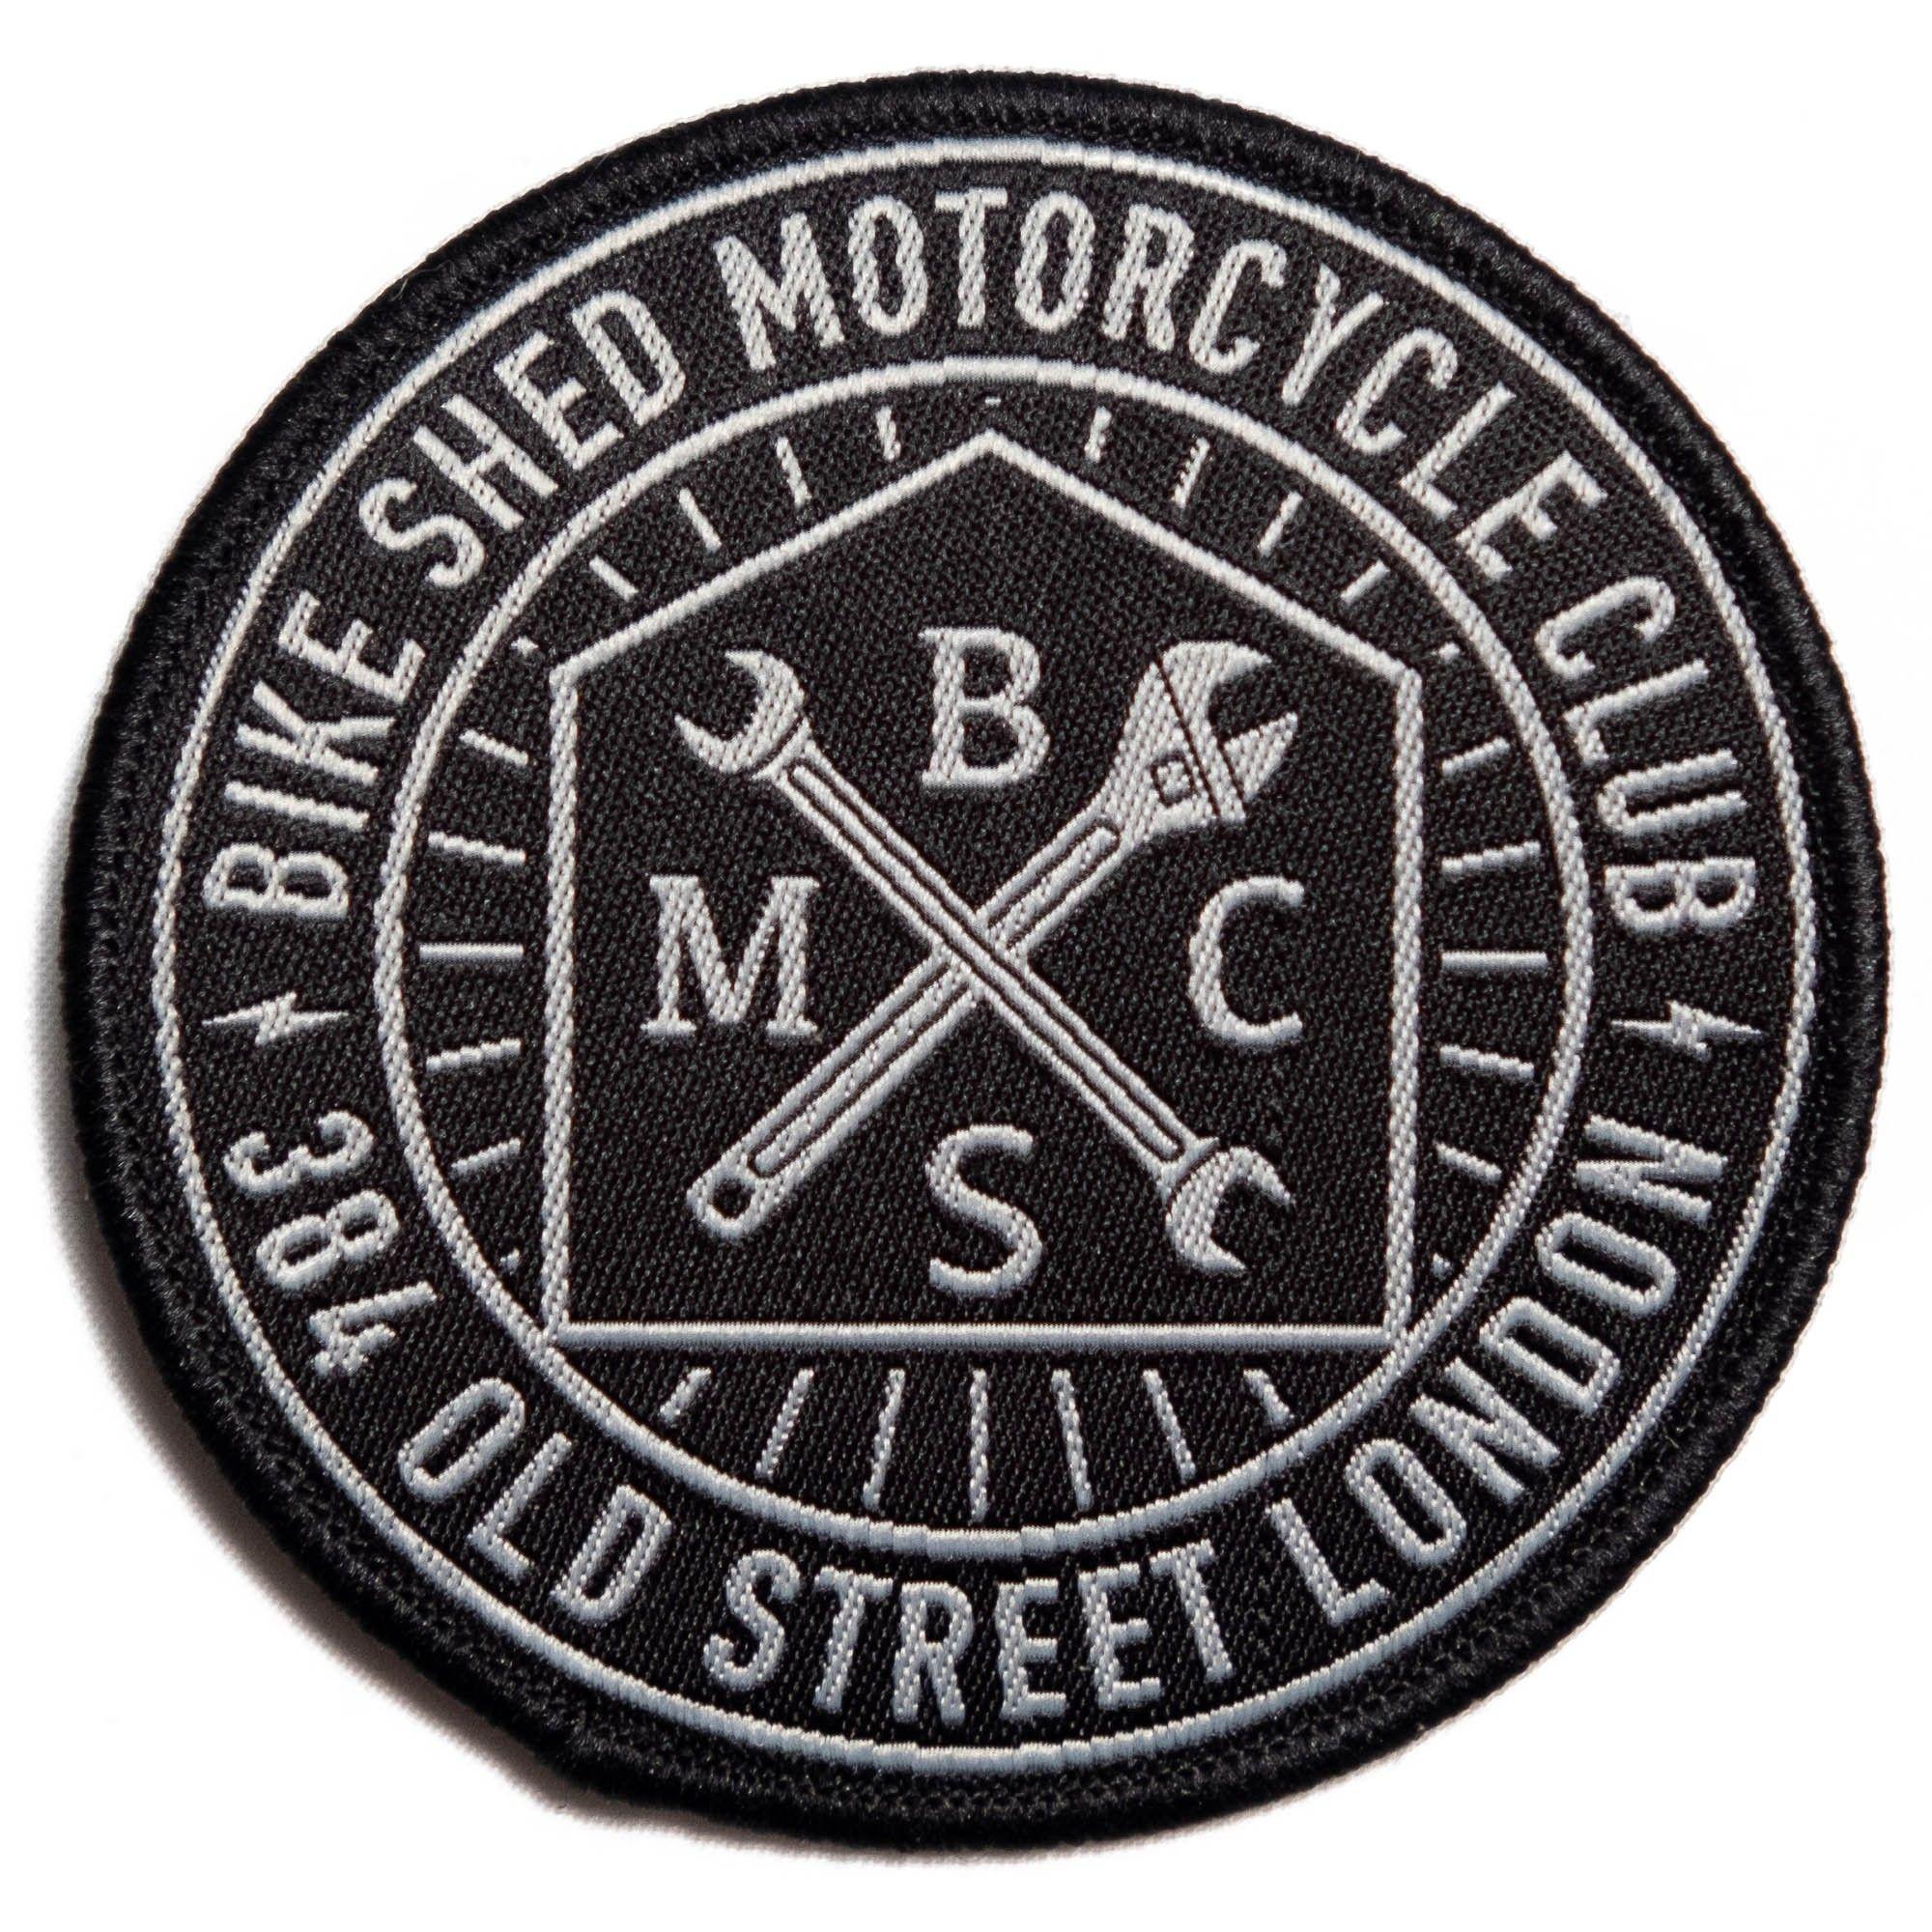 BSMC Logo - BSMC ROUNDEL PATCH - BLACK/WHITE - Urban Rider London